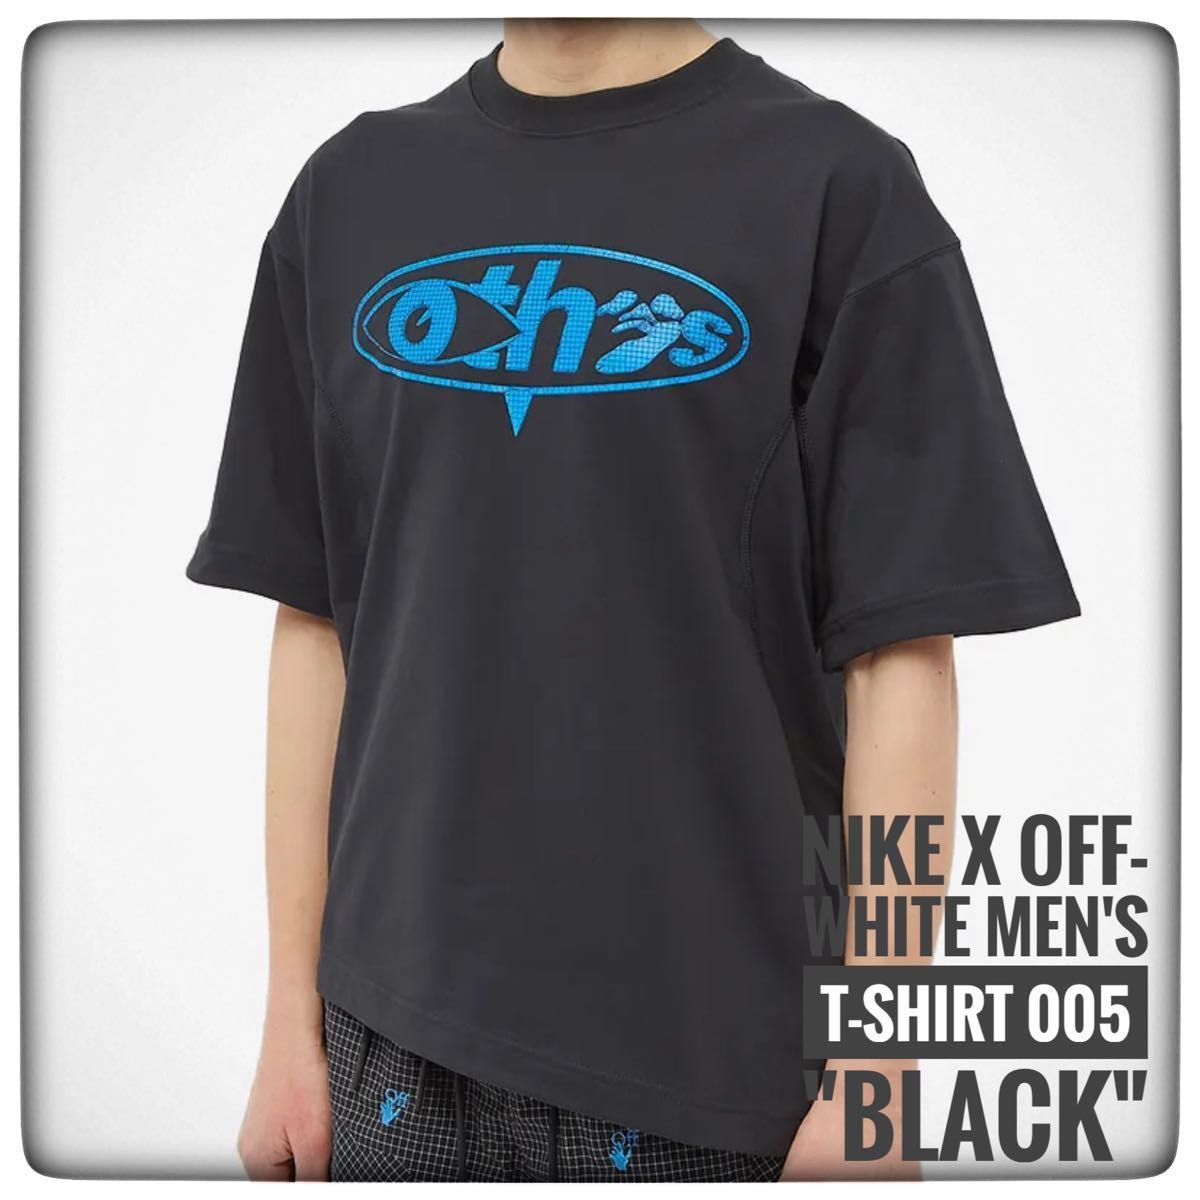 【XLサイズ】Nike x Off-White Men's T-shirt 005 